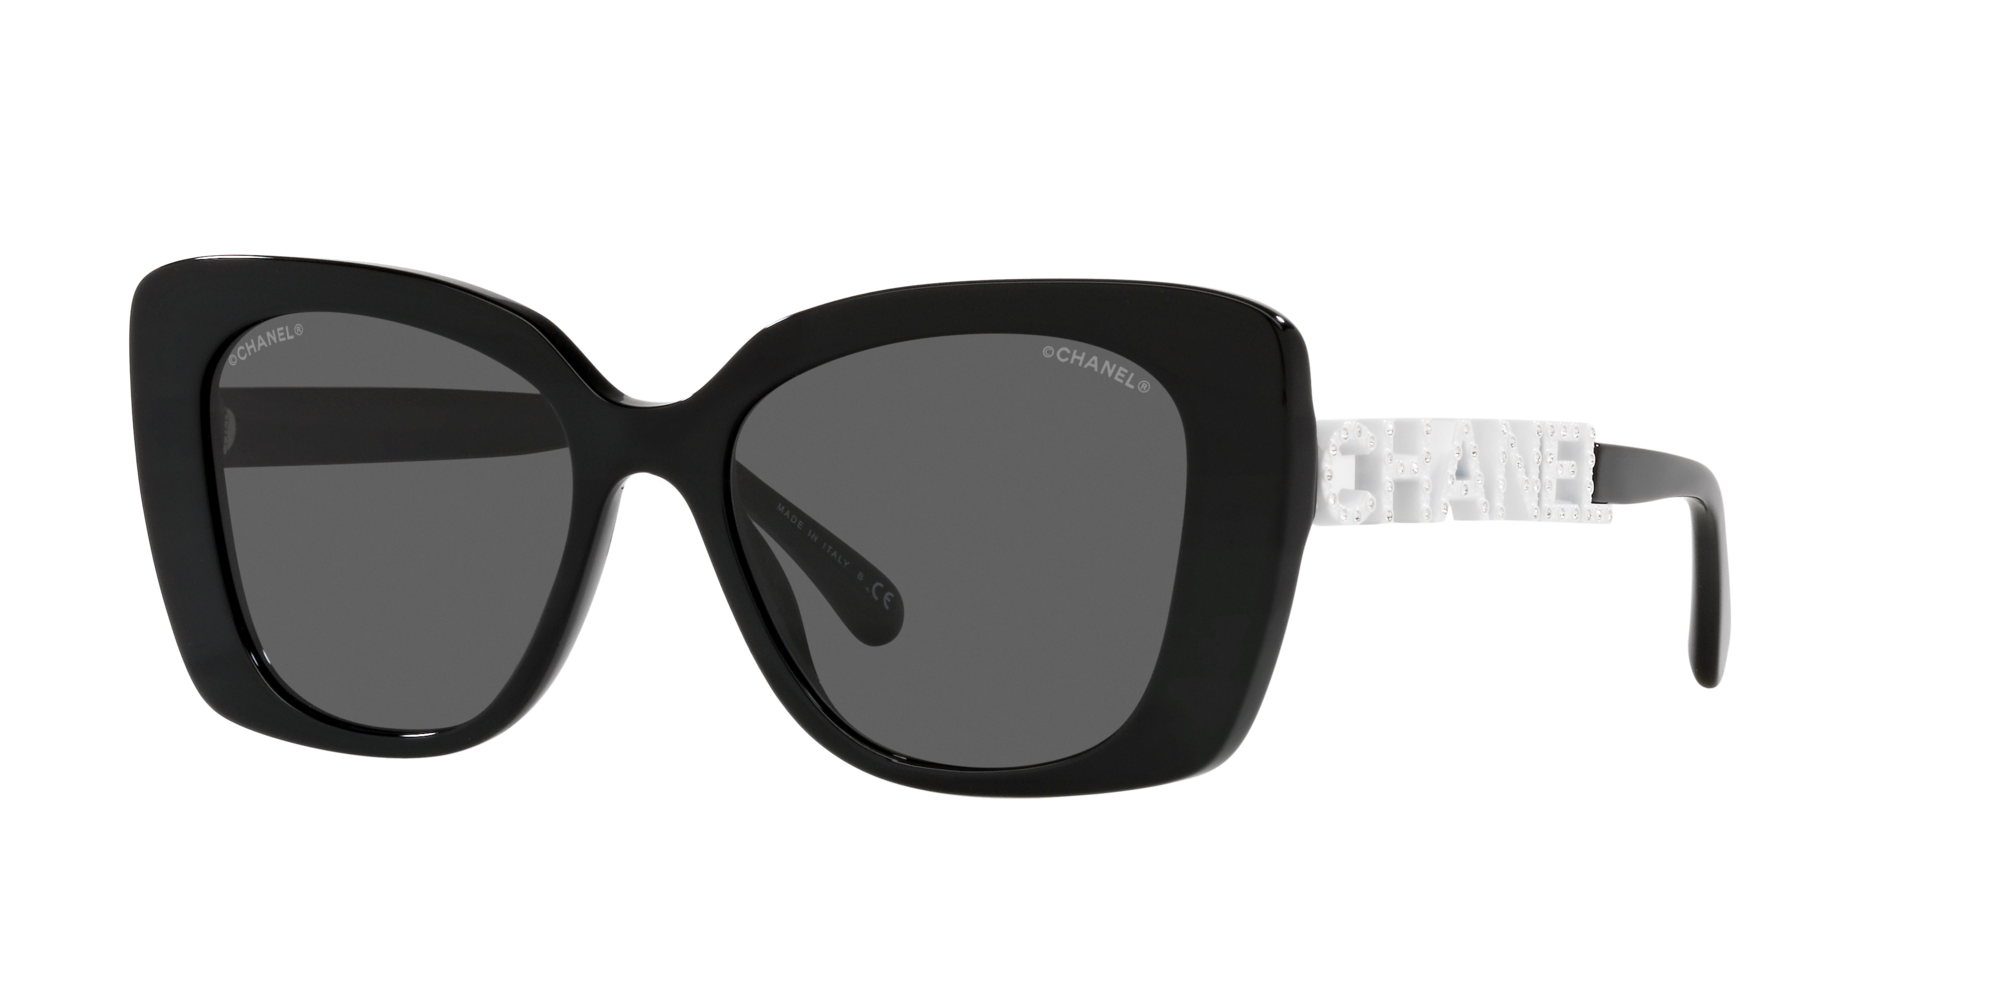 CHANEL CH5422B/C50157 - Sunglasses  Chanel sunglasses, Sunglasses women  designer, Stylish sunglasses